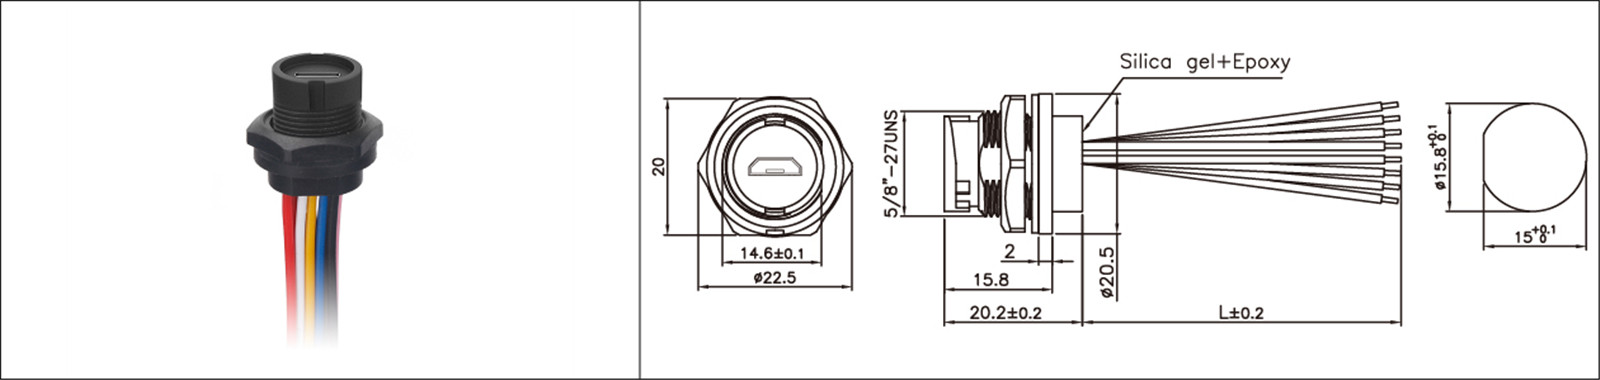 Montare pe panou Micro USB tip 2.0 3.0 femel și masculin impermeabil IP67 cablu prelungitor supramuld conector industrial-02 (1)